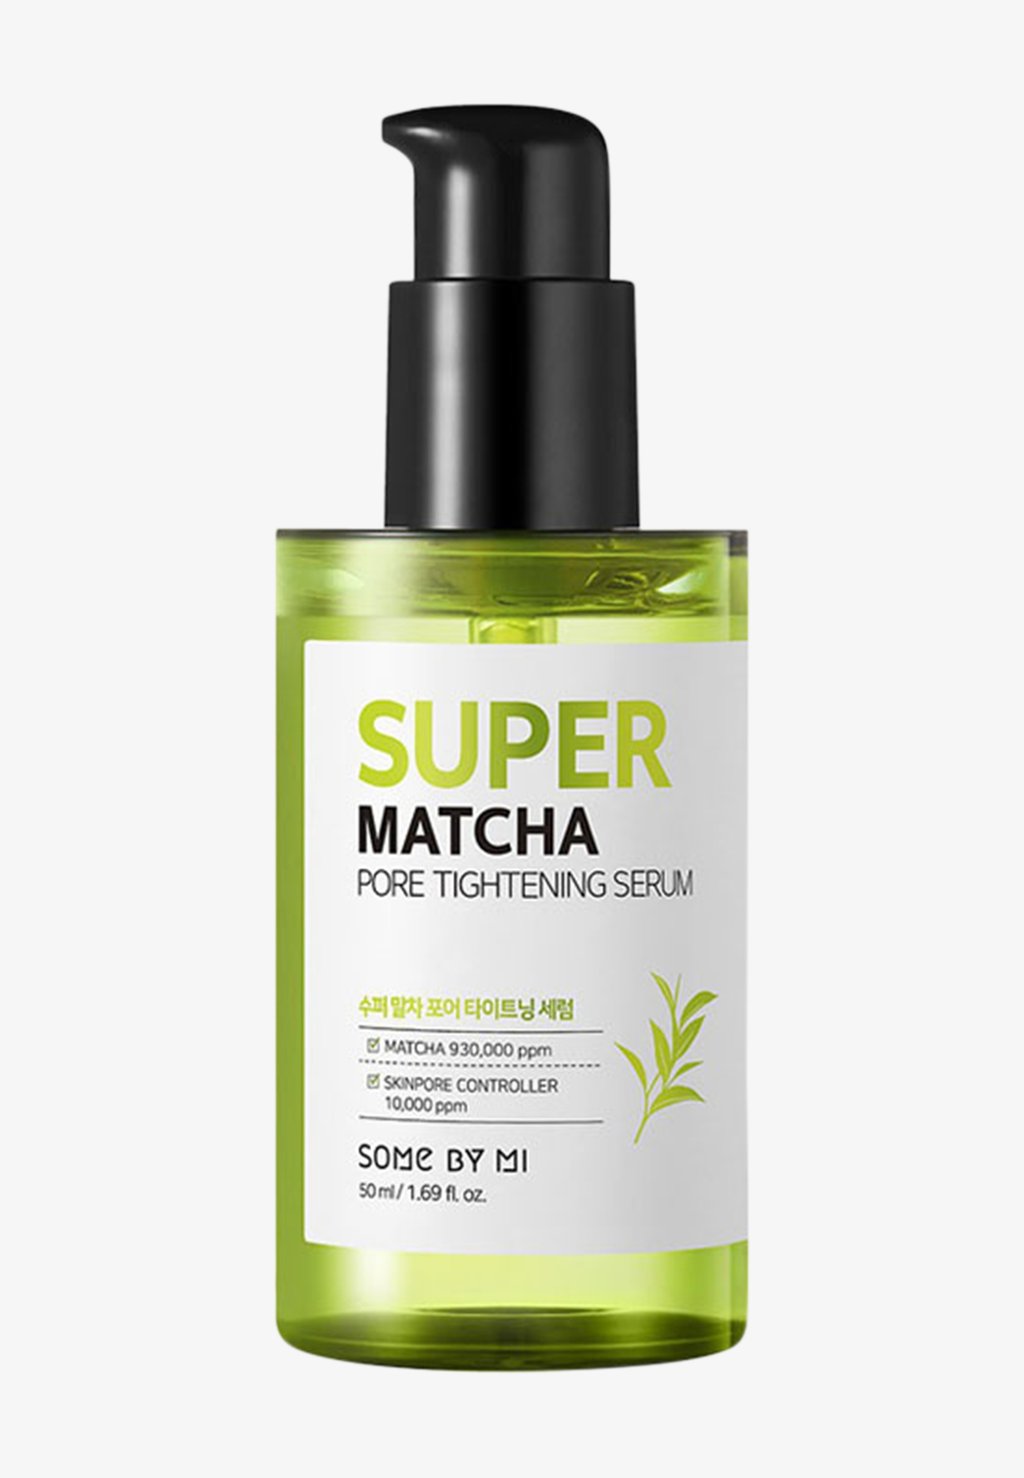 сыворотка some by mi matcha pore tightening serum 50 Сыворотка Super Matcha Pore Tightening Serum SOME BY MI